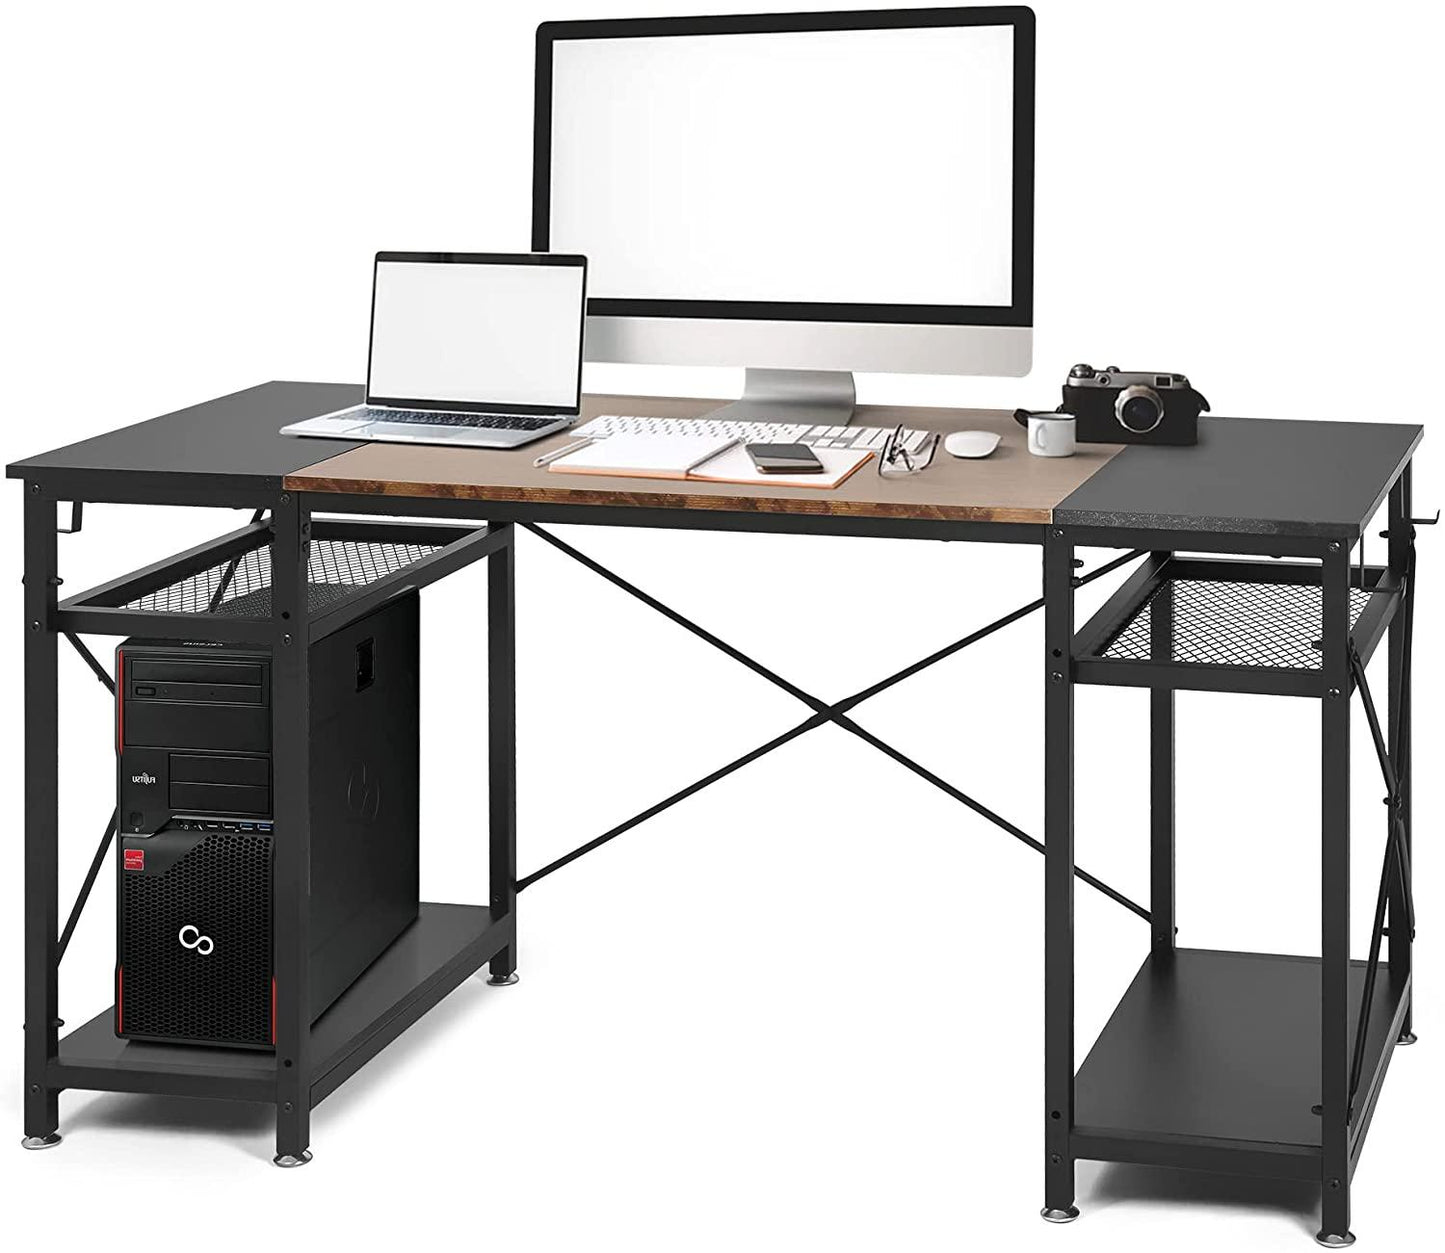 47.2" Home Office Desk with Storage Shelves & Hooks